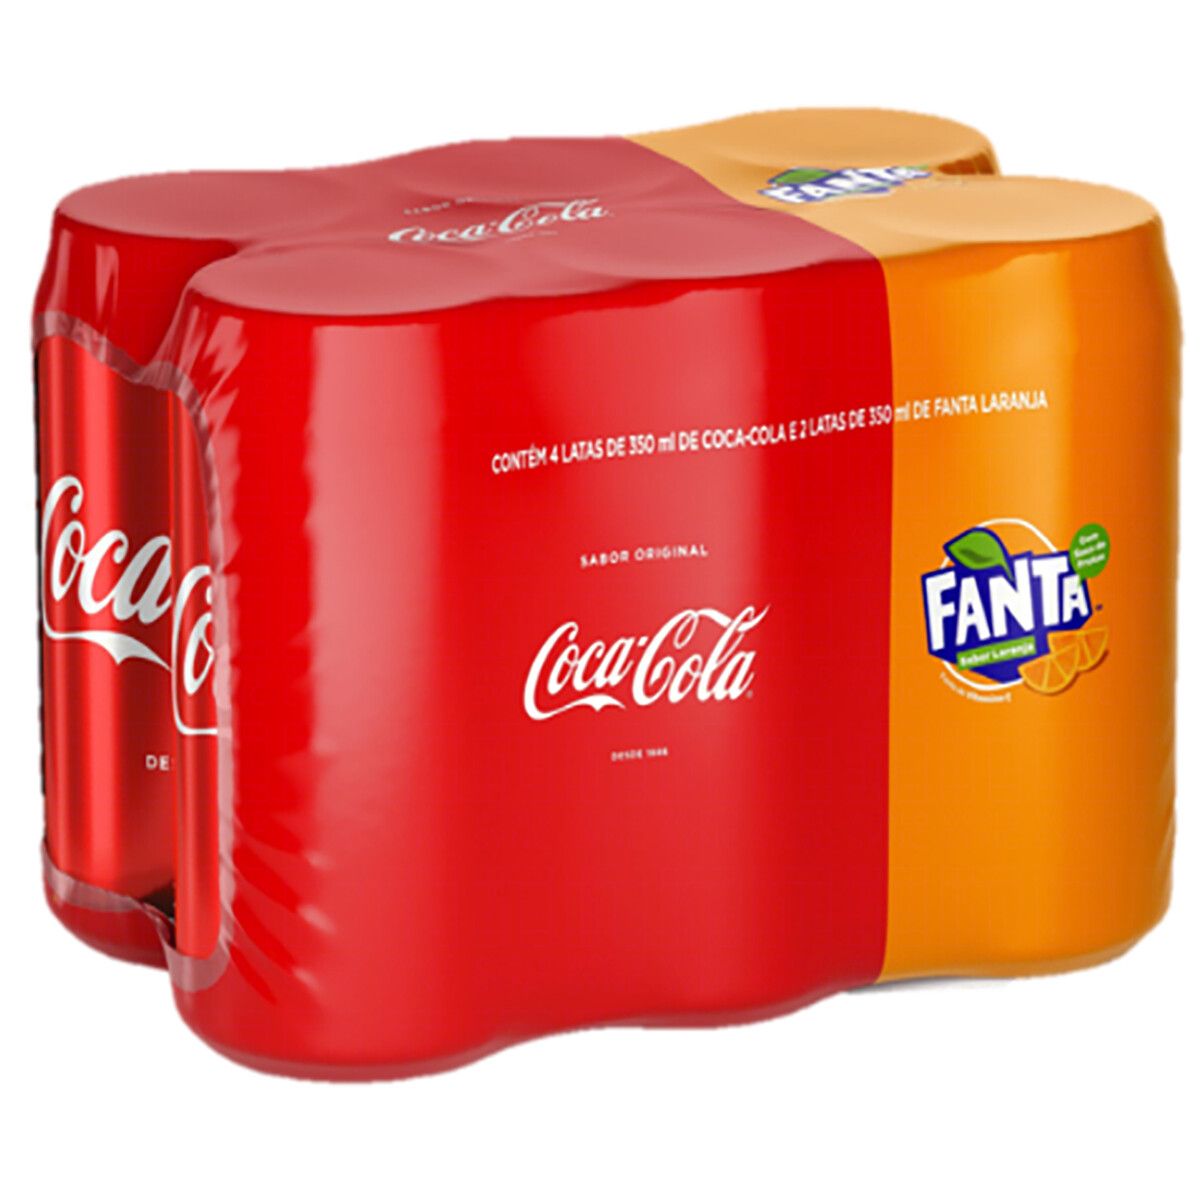 Kit 4 Refrigerantes Coca-Cola Original + 2 Laranja Fanta 350ml Cada